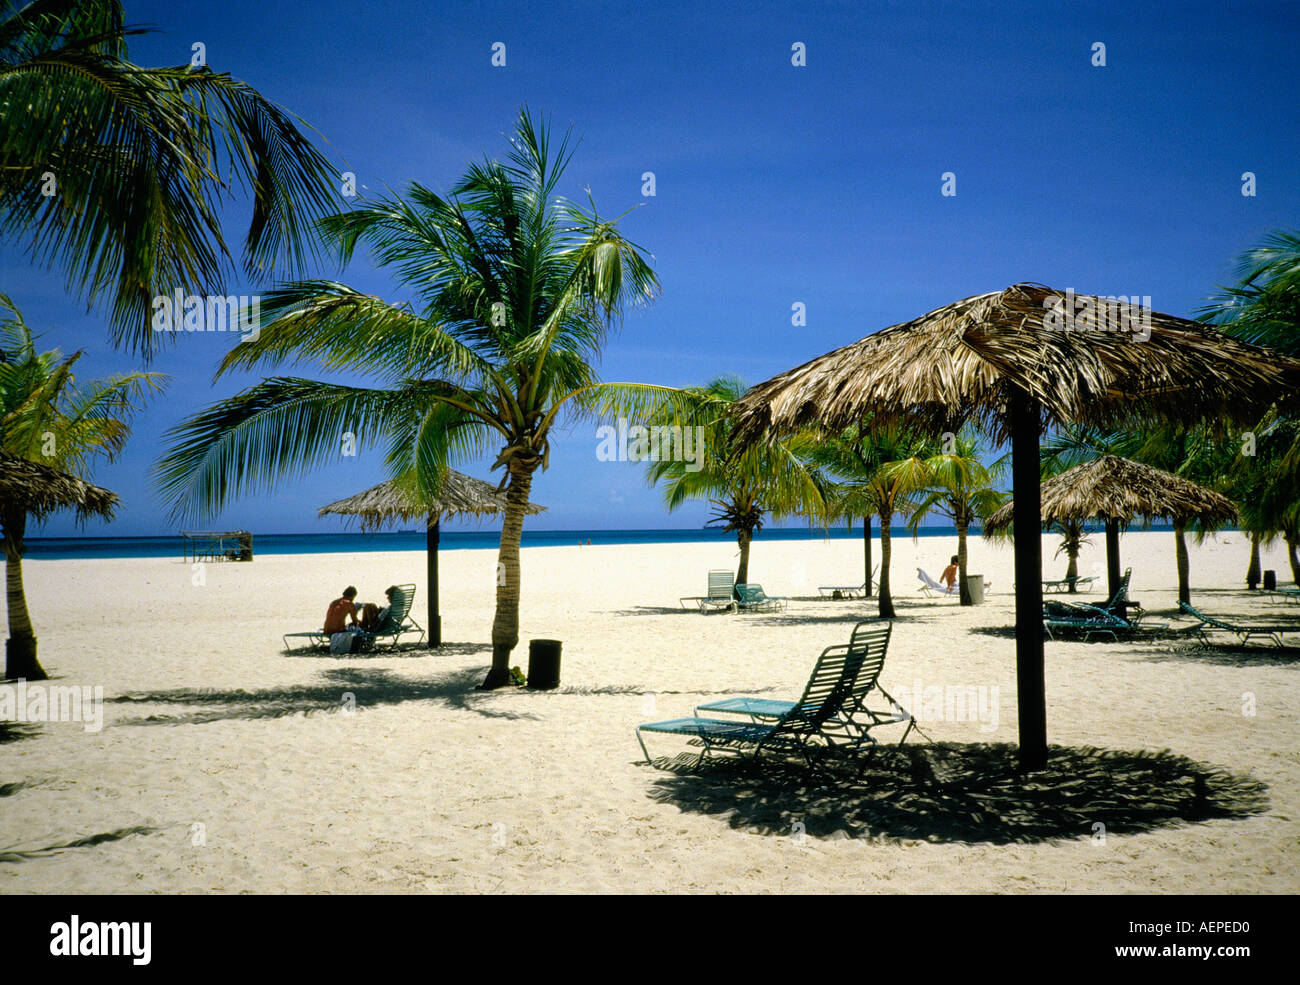 beachlife island of aruba islands of the netherlands antilles archipelago of the lesser antilles caribbean Stock Photo